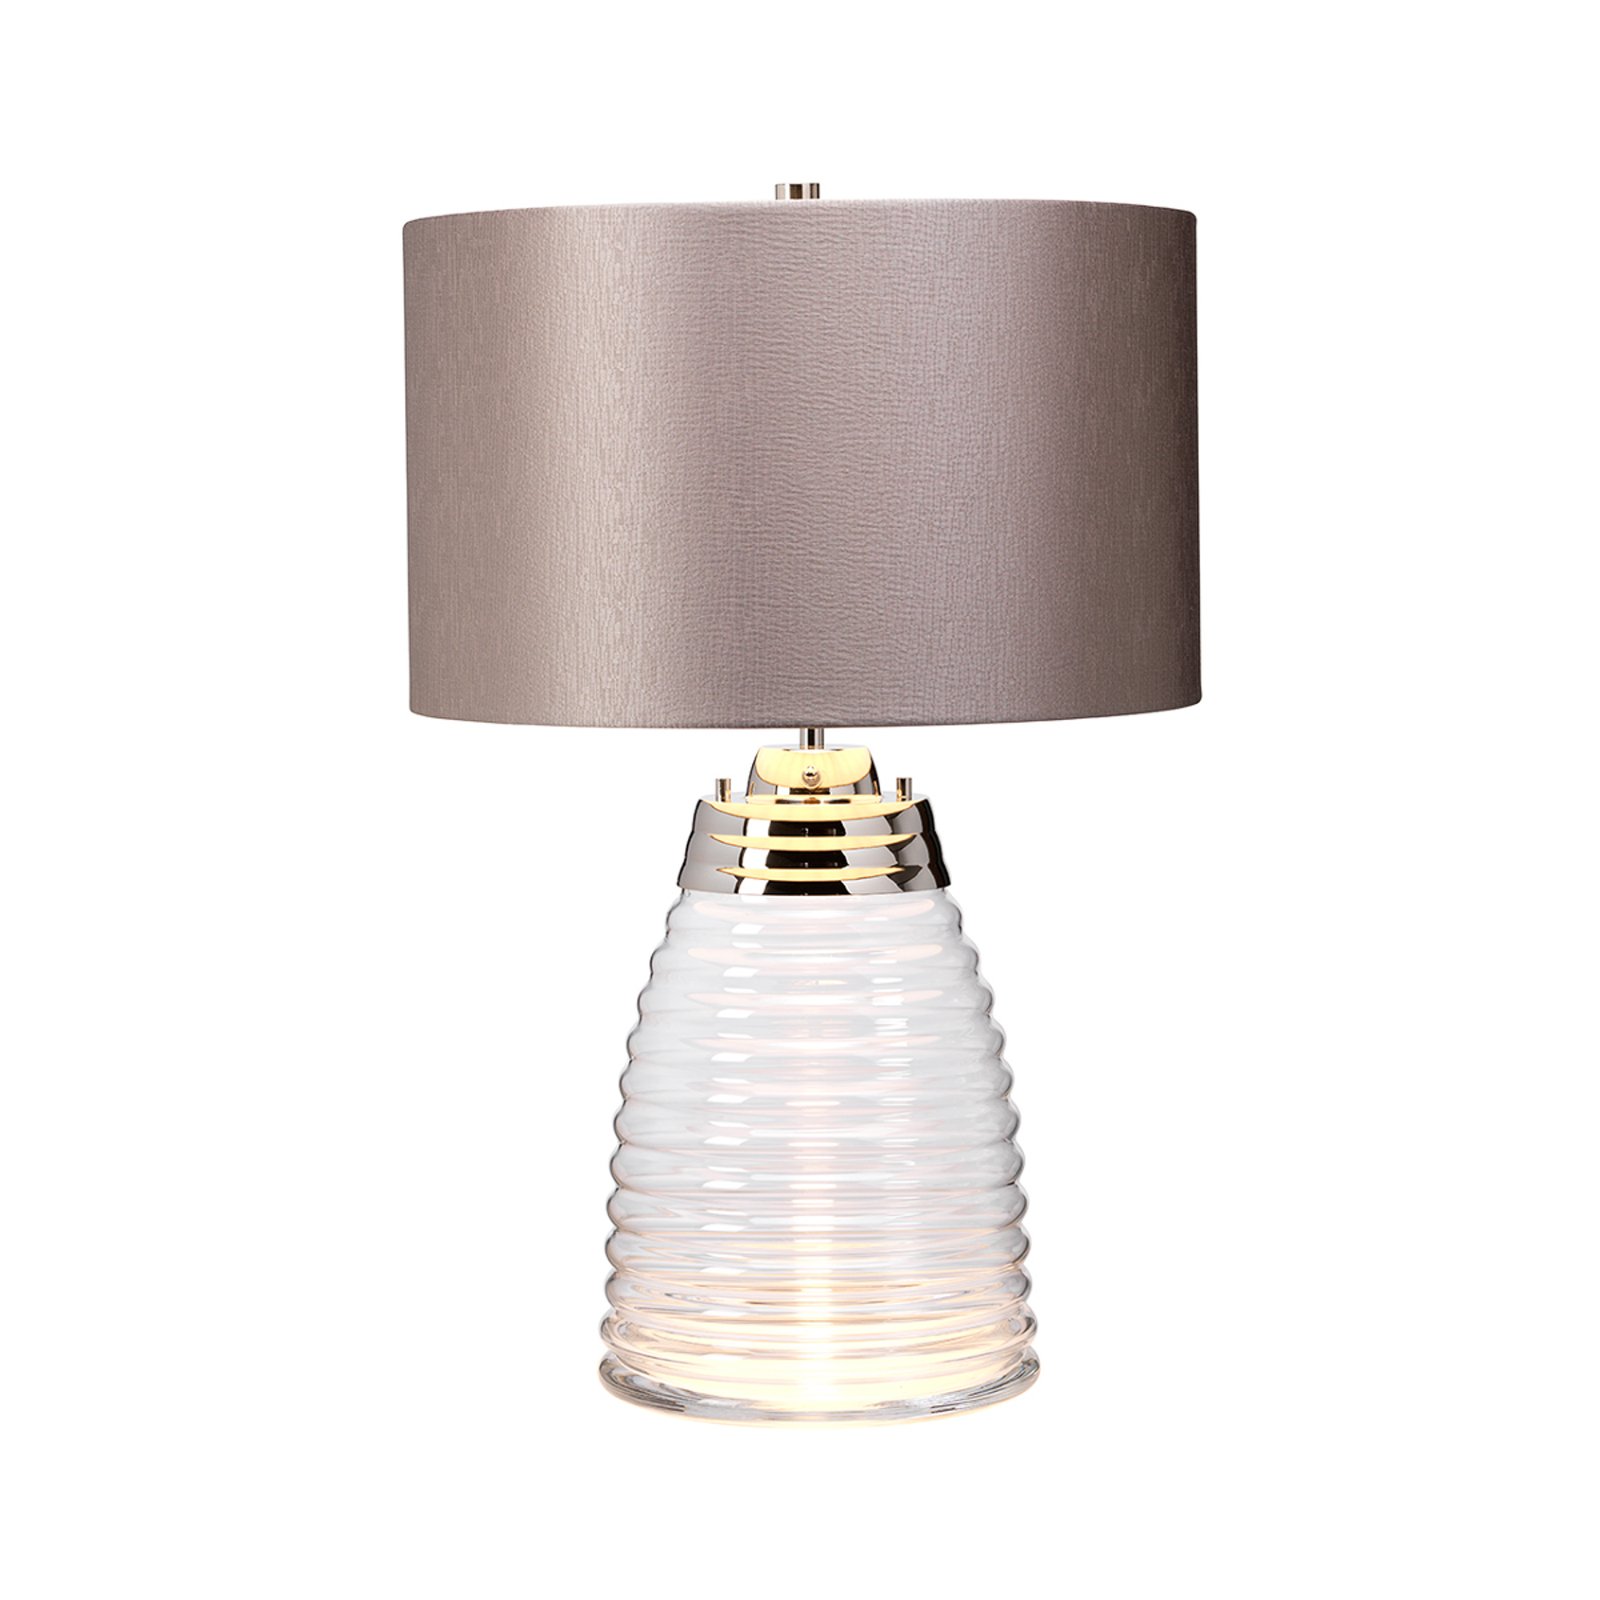 Milne table lamp glass base grey lampshade